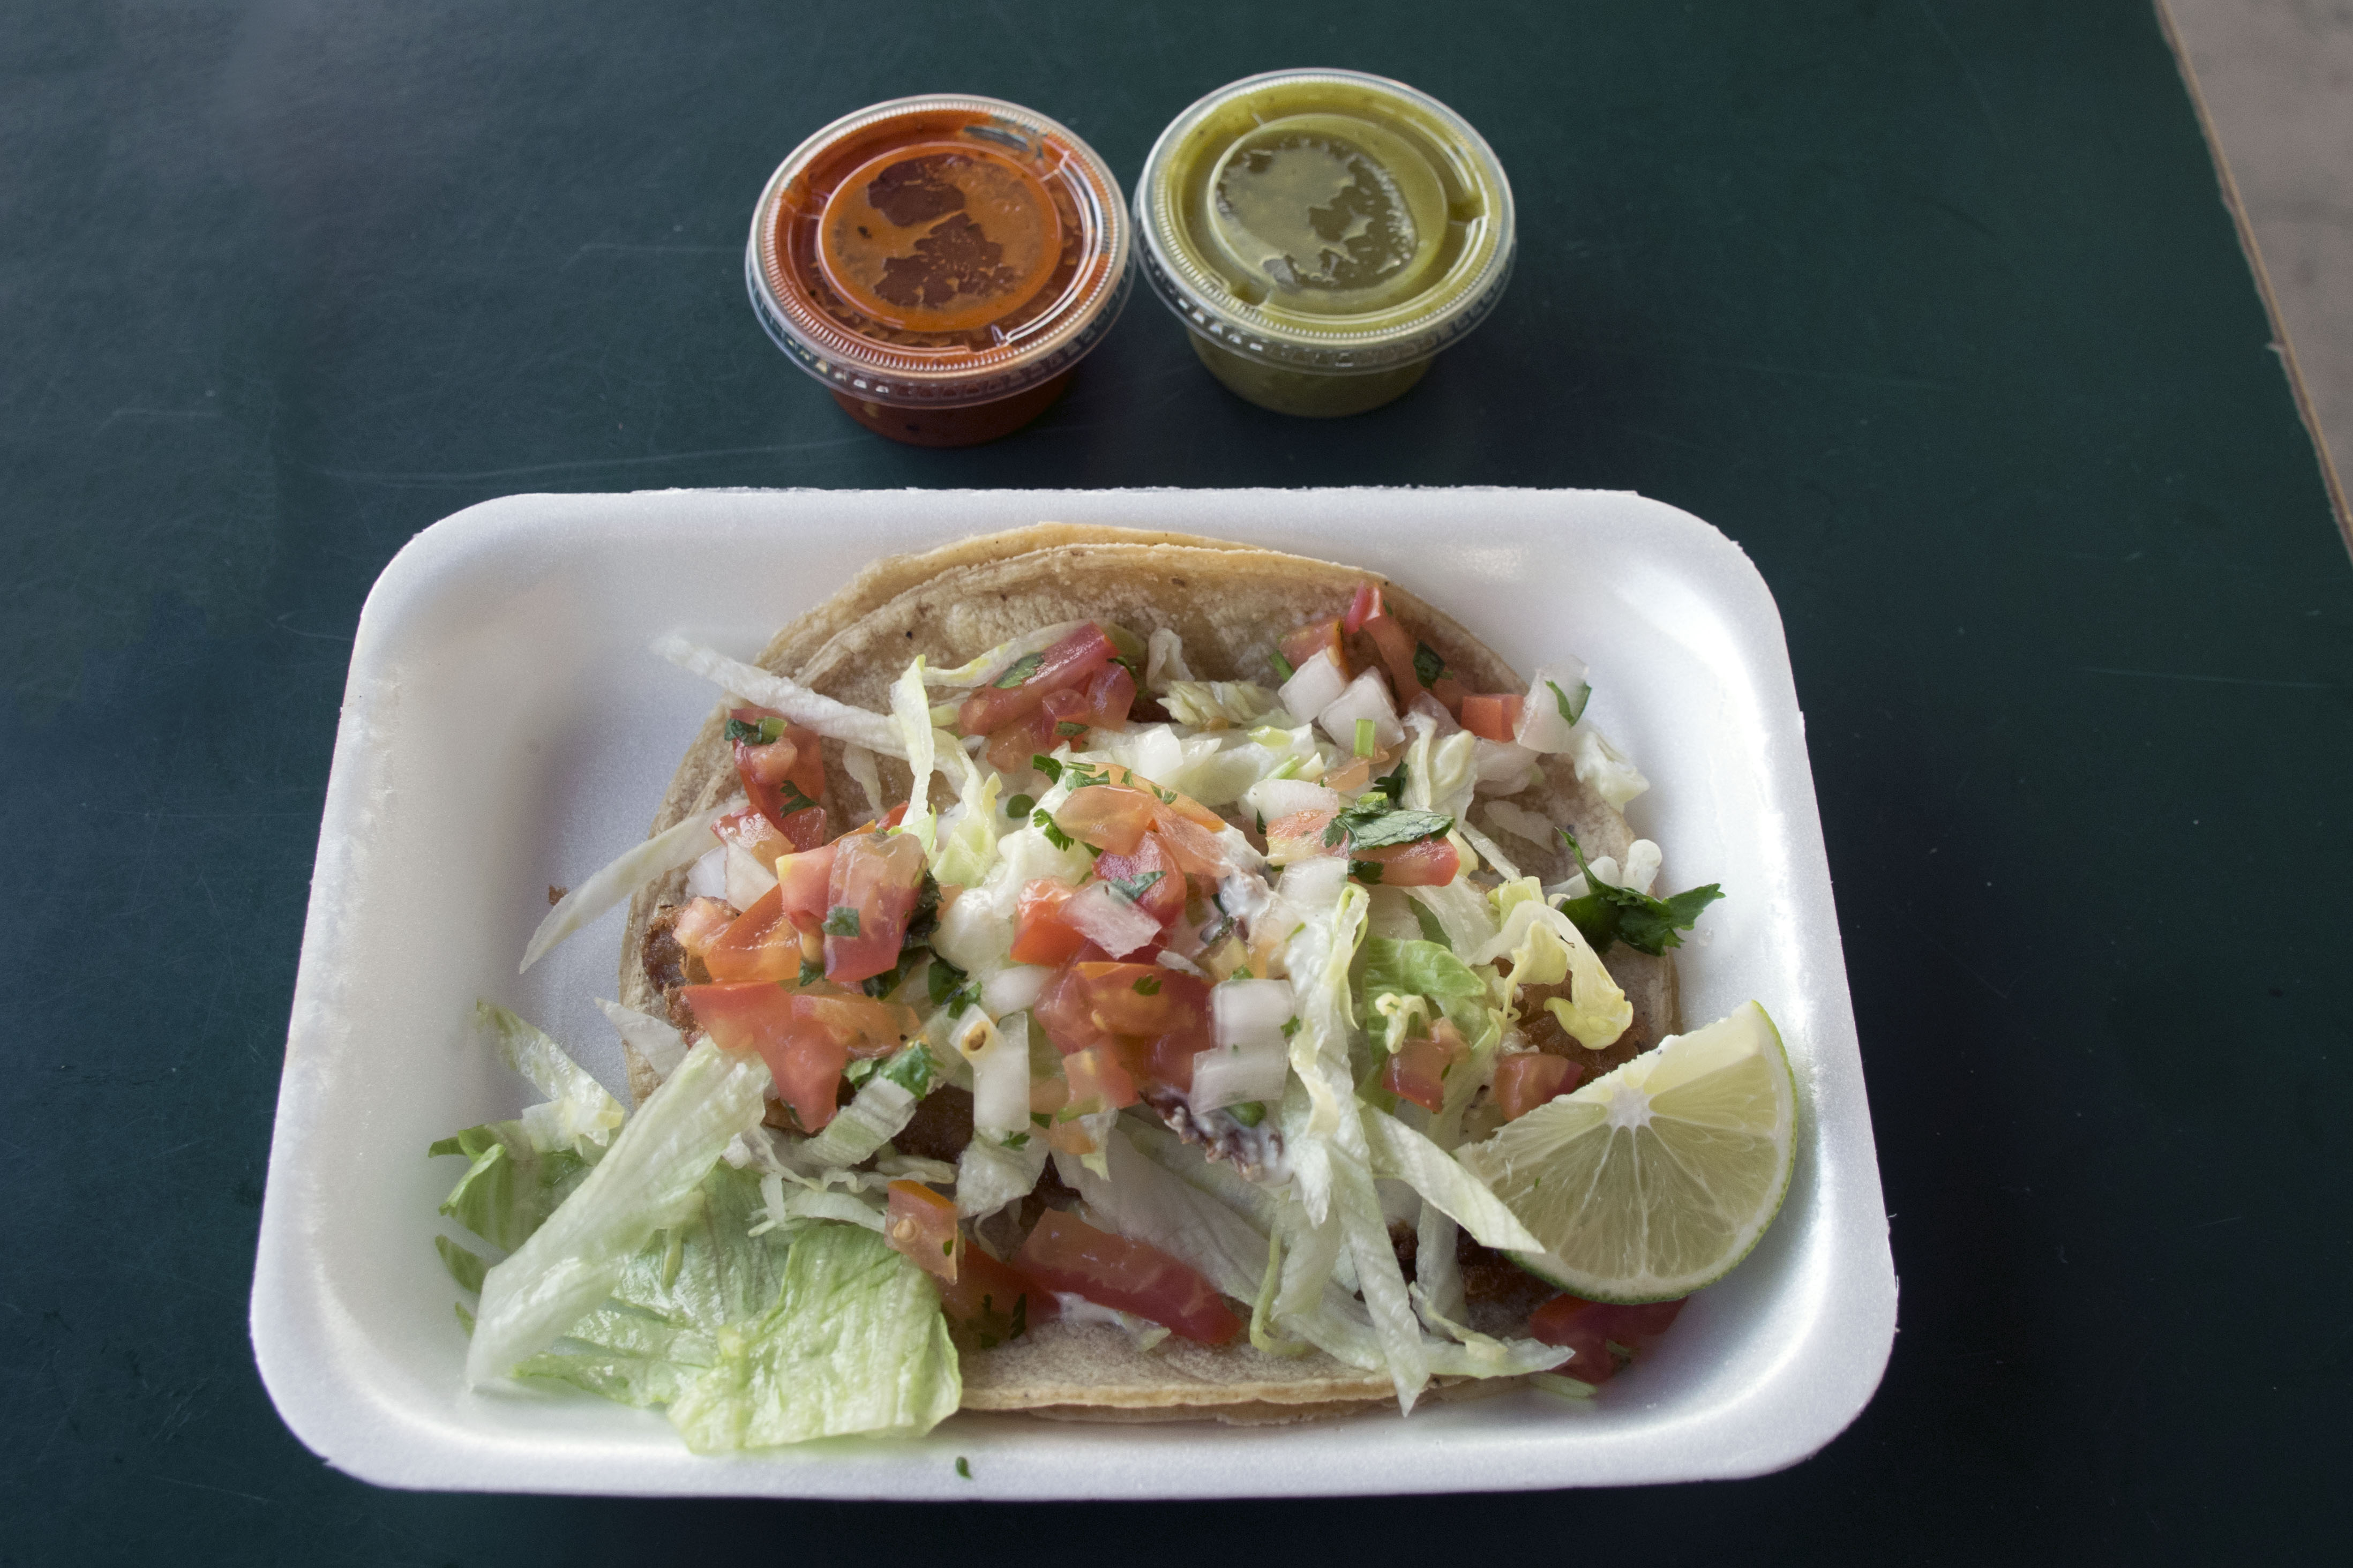 Fish taco from El Paso in Campo California